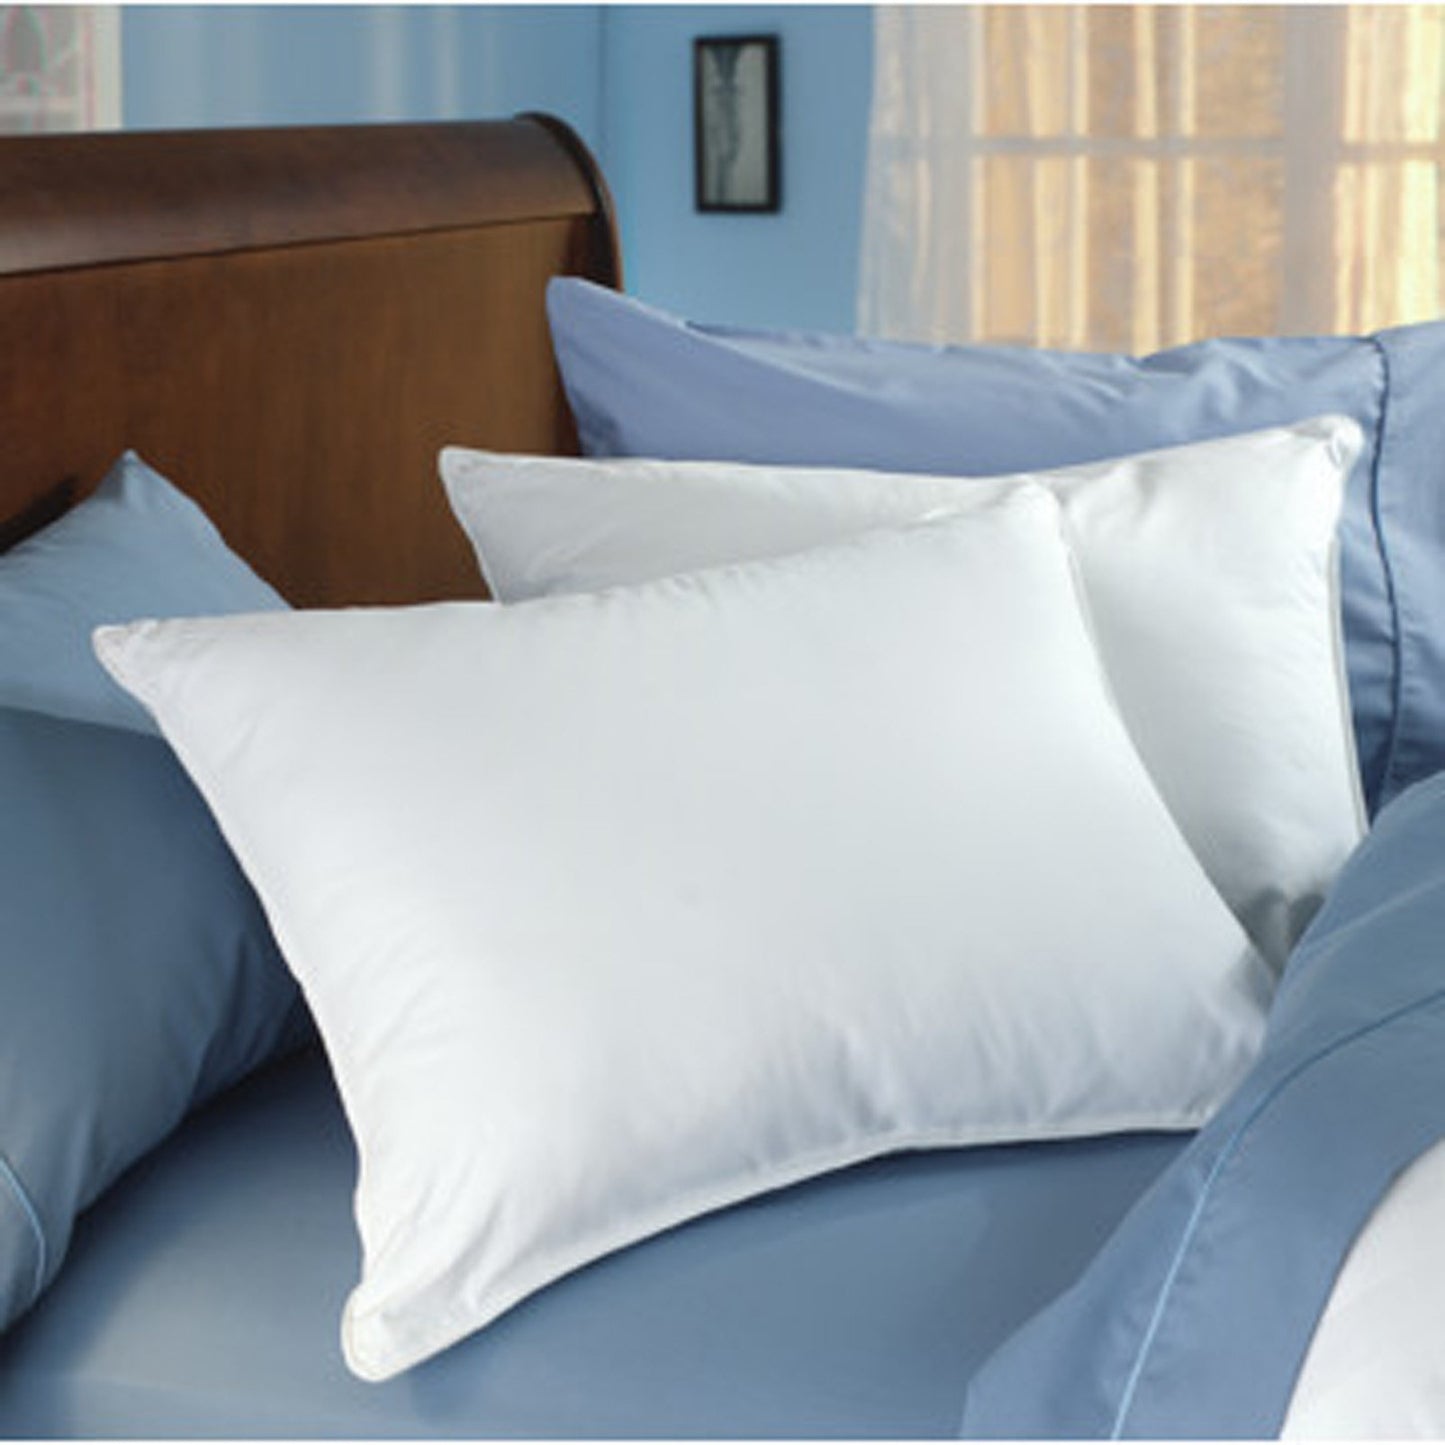 Envirosleep Dream Surrender King 2 Pillows Found at Embassy Suites